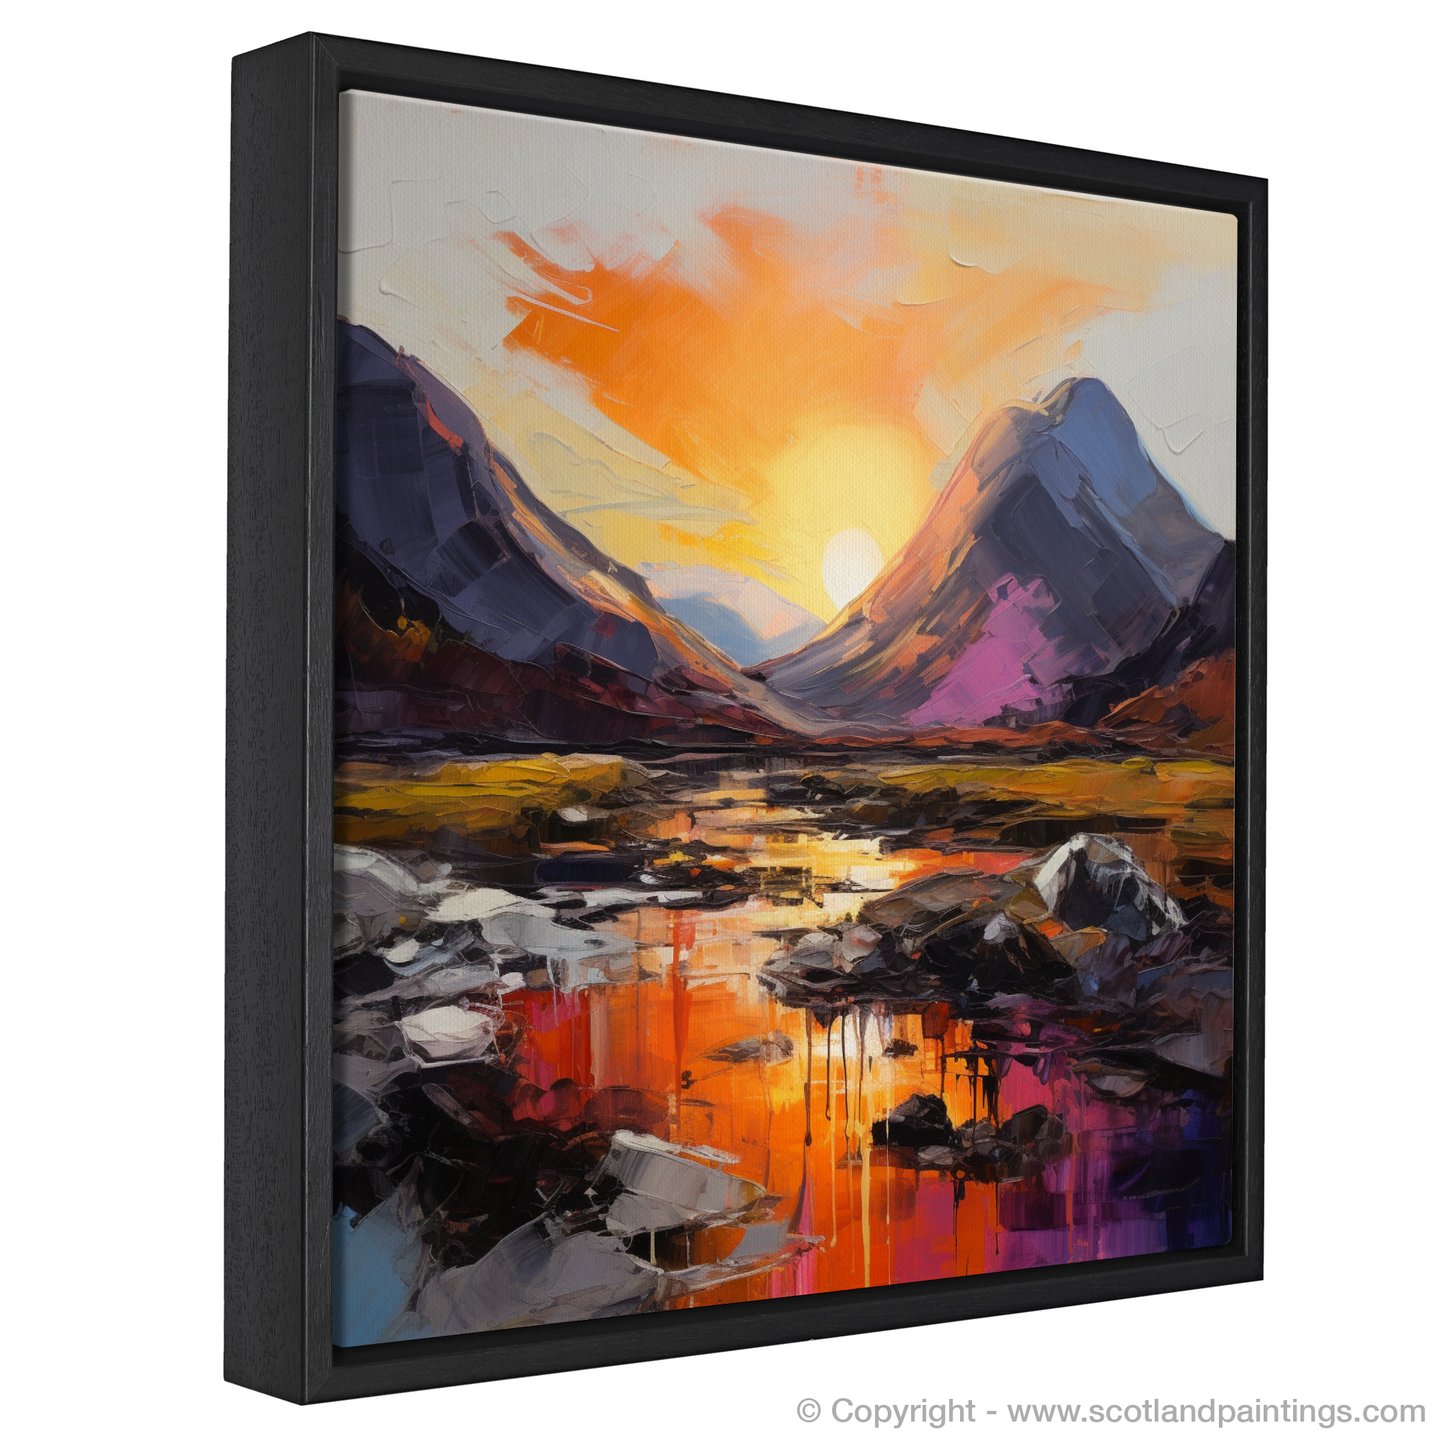 Painting and Art Print of Sunset glow in Glencoe entitled "Sunset Glow over Glencoe Highlands".